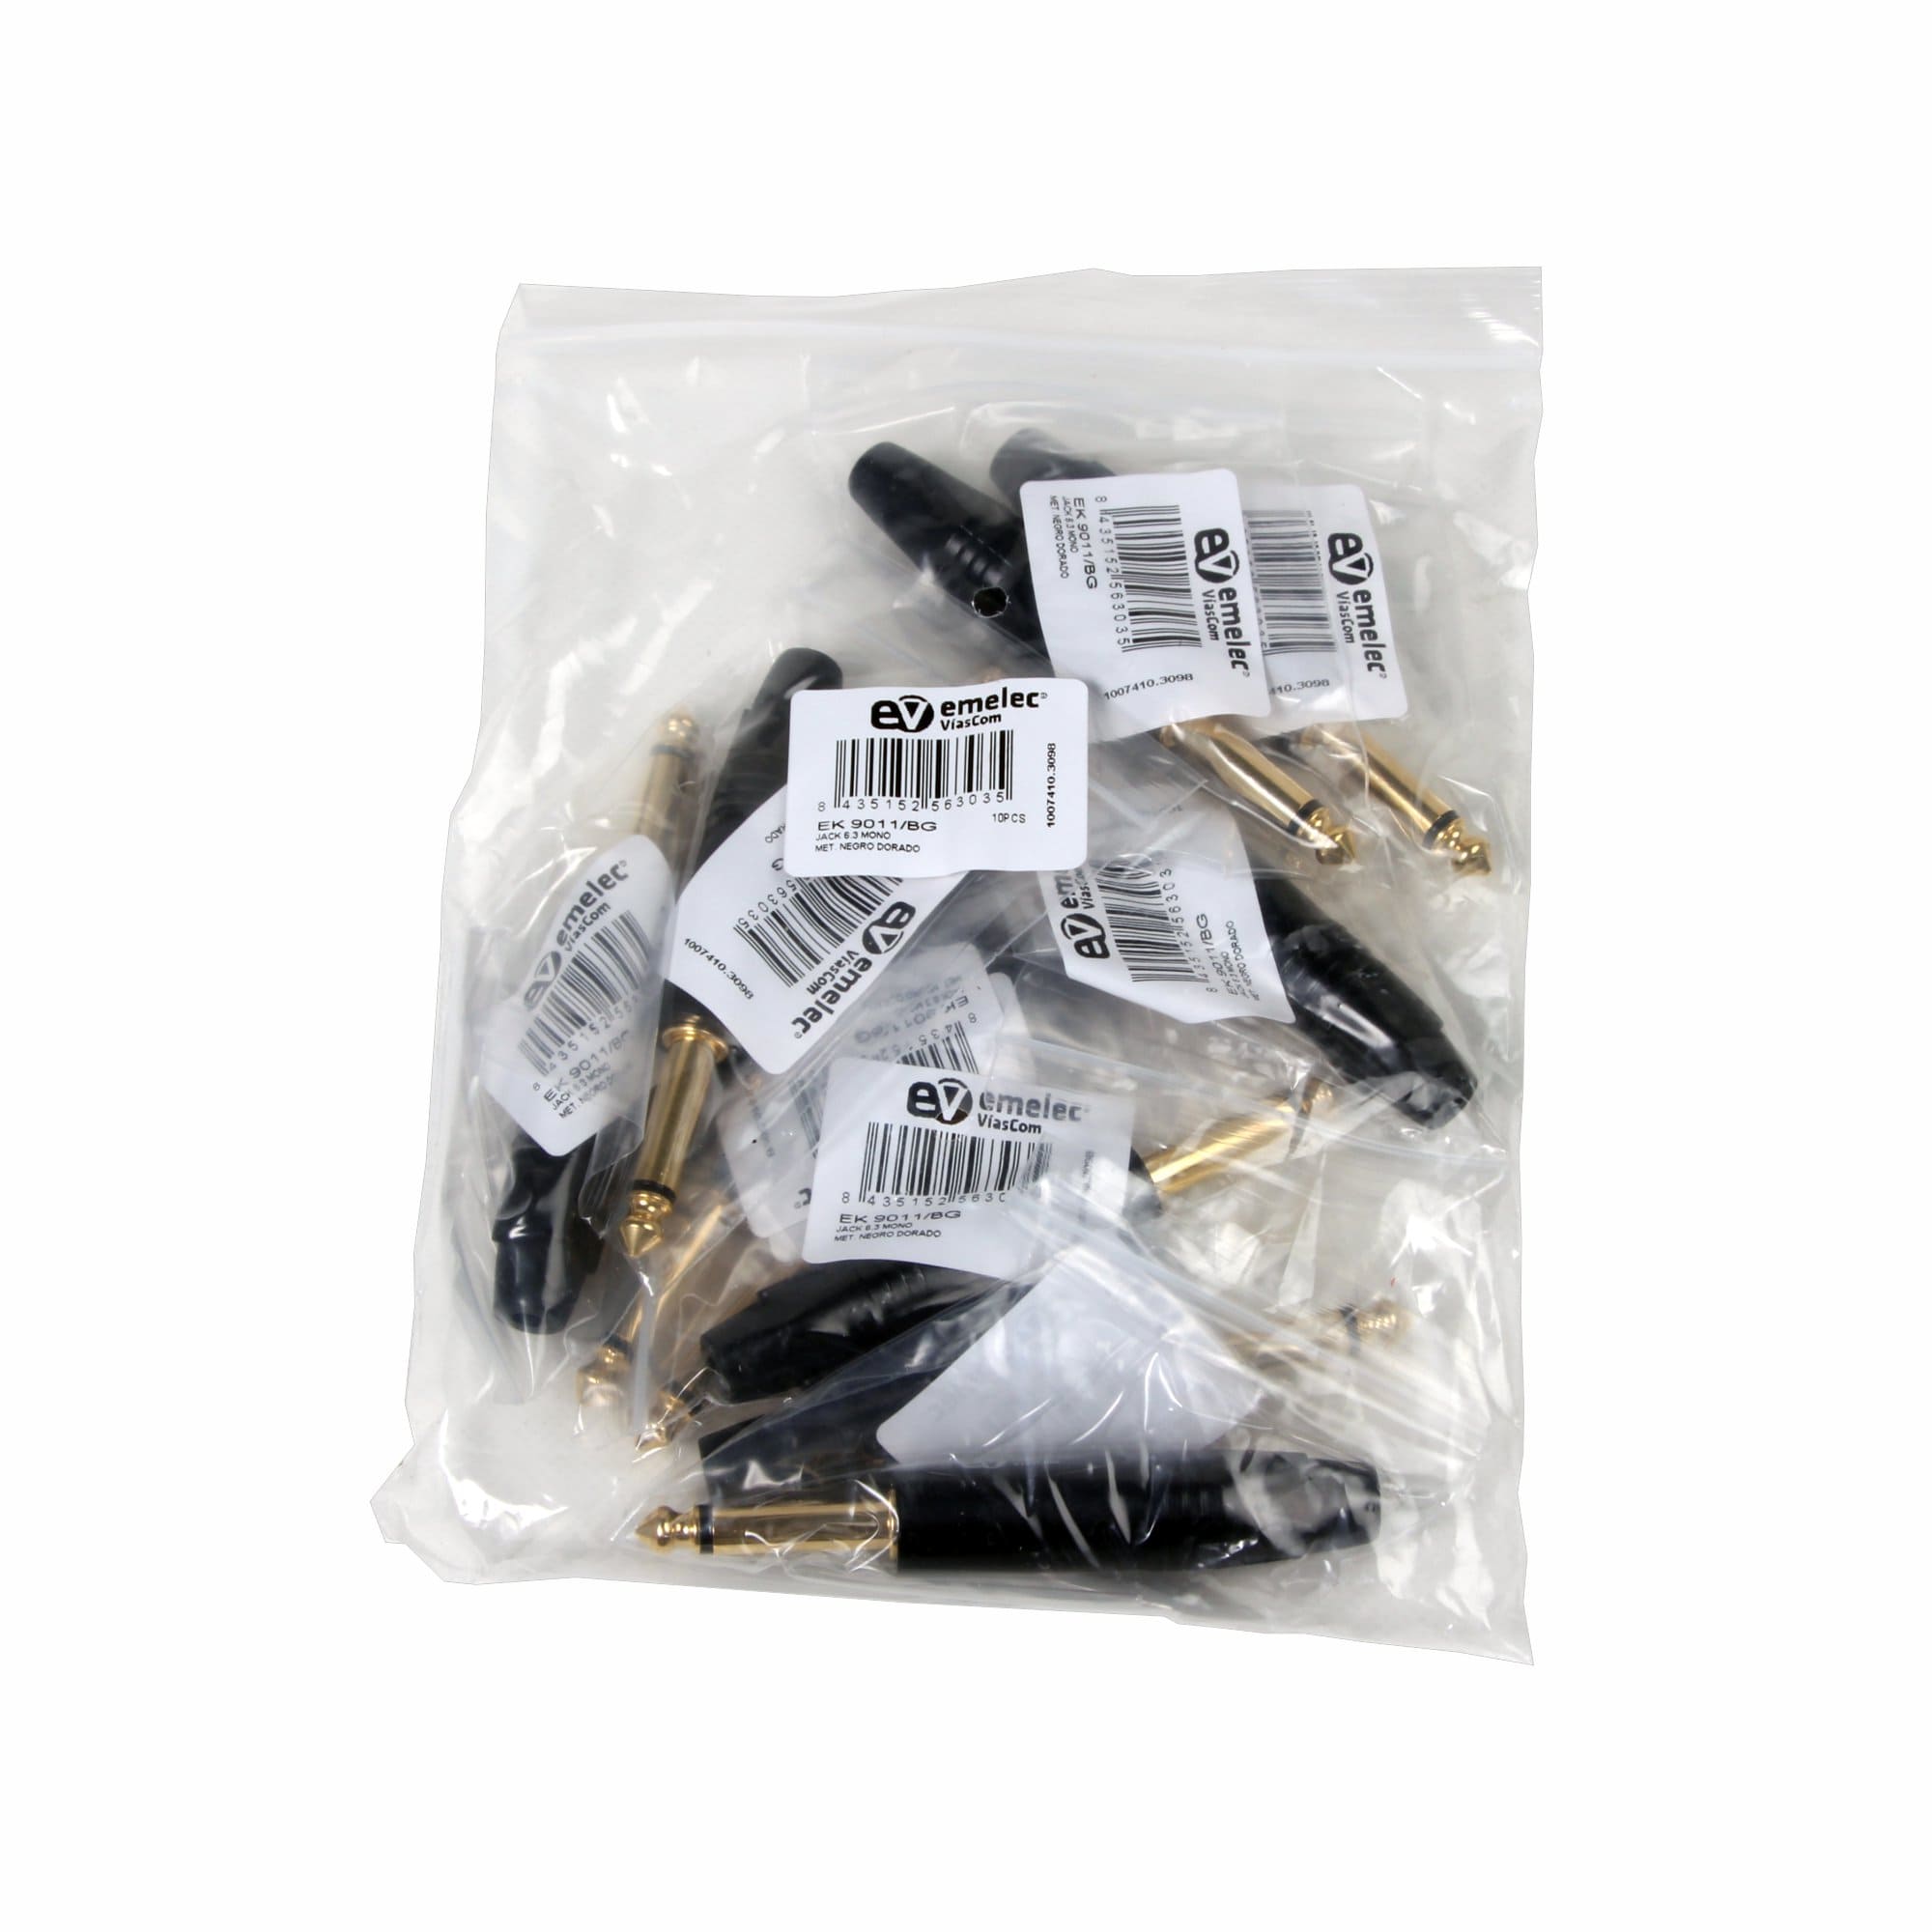 Plastic bag with 10 Emelec ViasCom black and gold 6.3 mono male jack connectors